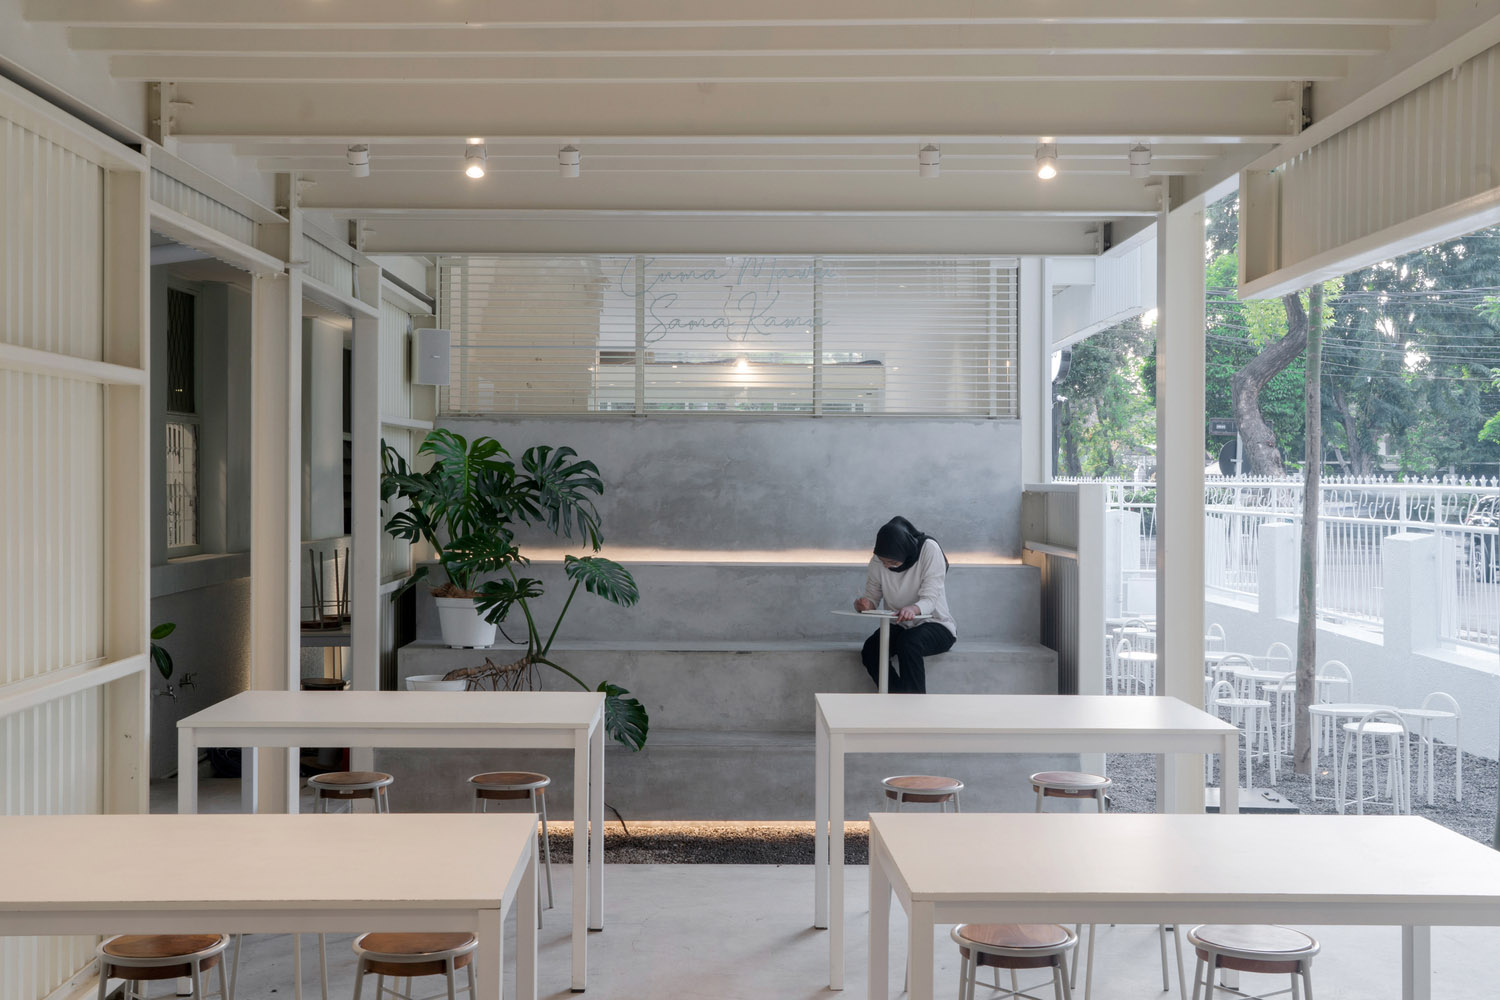 ANTI,咖啡厅设计案例,咖啡店设计,印尼,MAWU 咖啡厅,办公室设计,咖啡厅设计,咖啡店设计案例,创意咖啡店